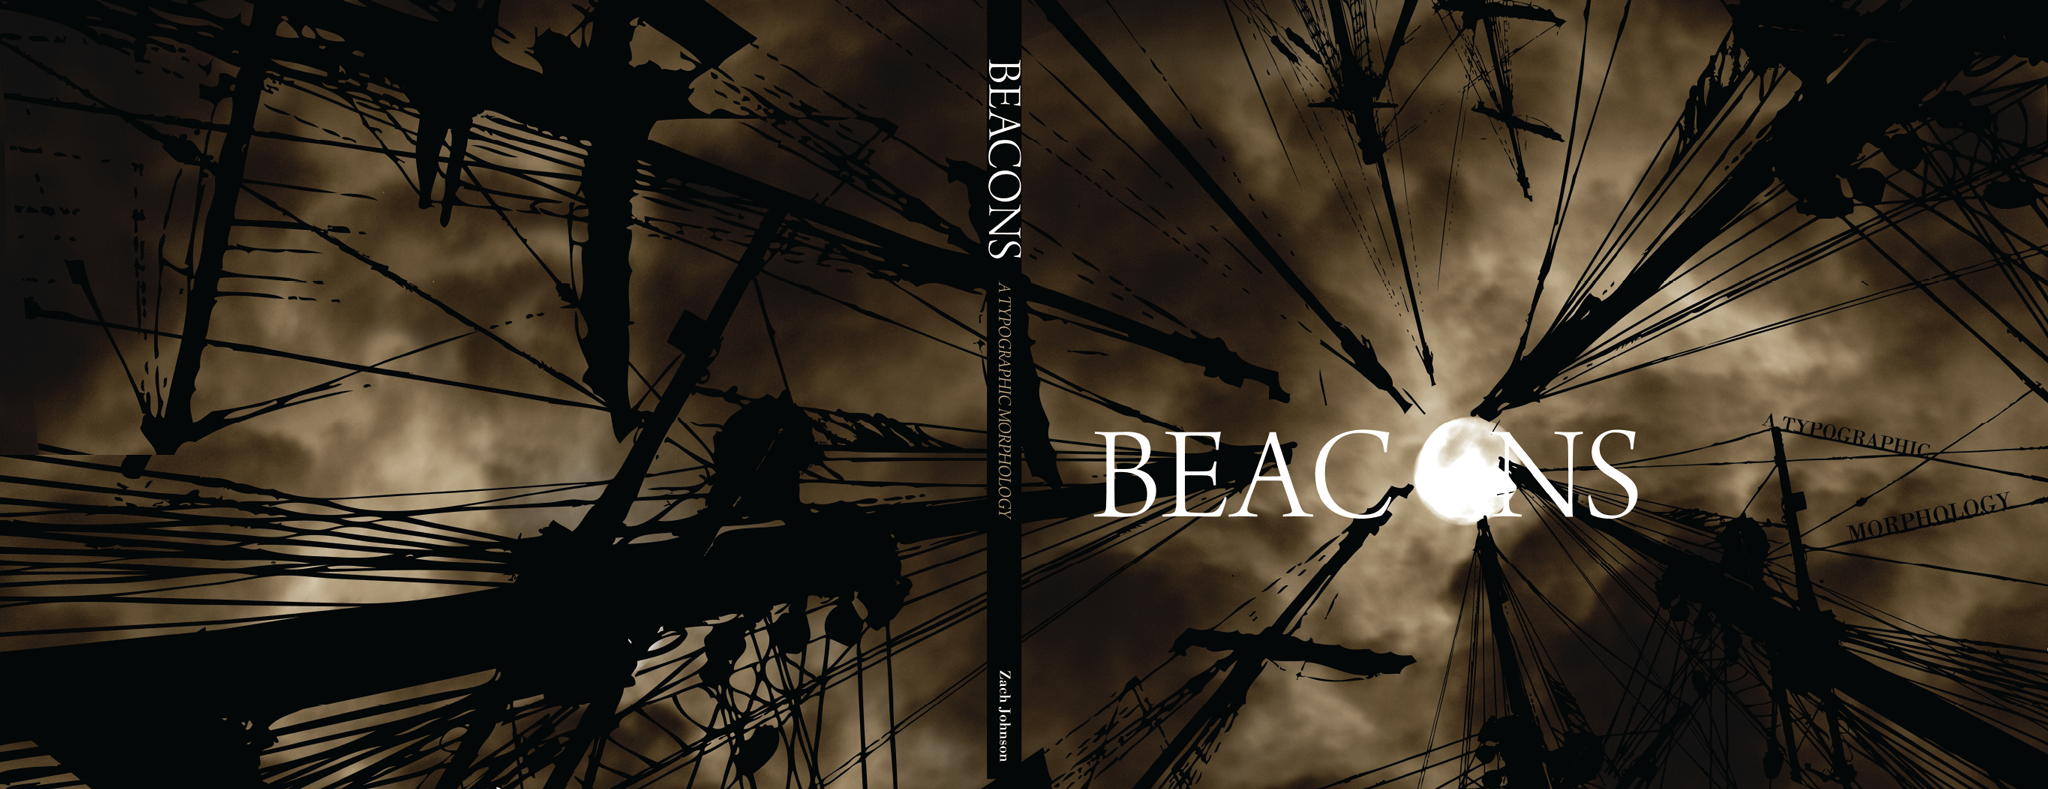 Beacons Book Graphic Design